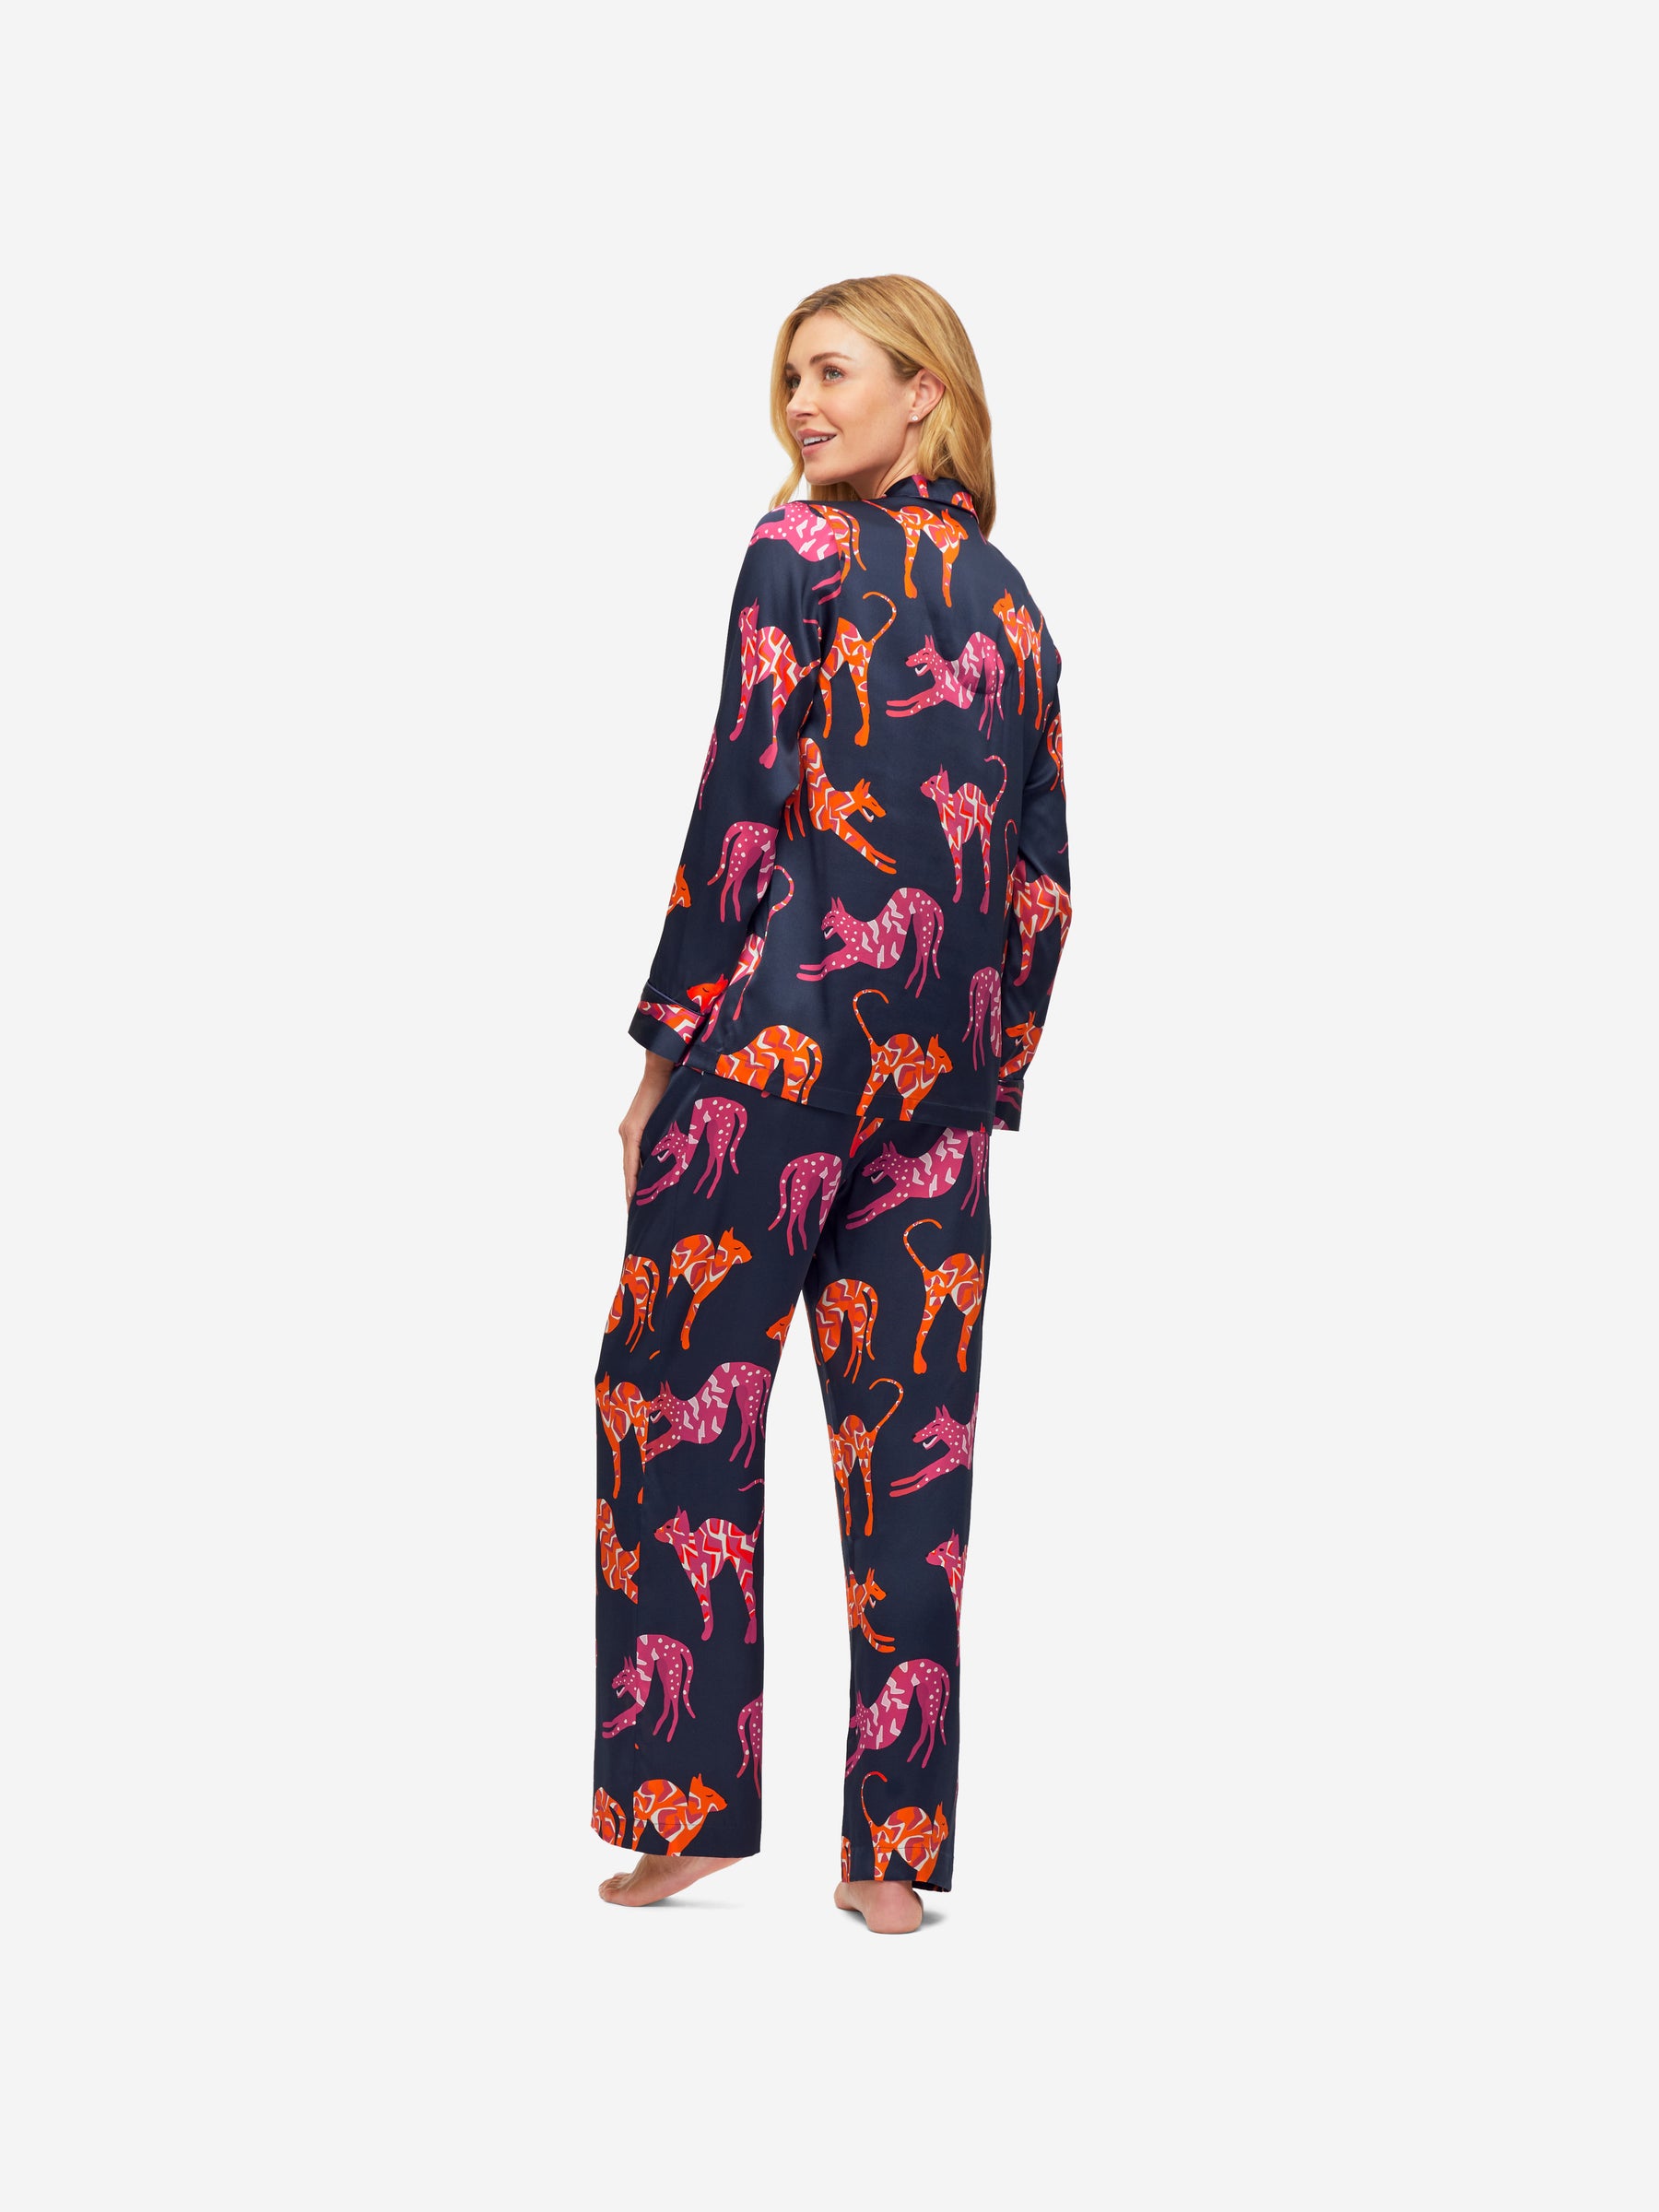 Women's Pyjamas Brindisi 83 Silk Satin Multi